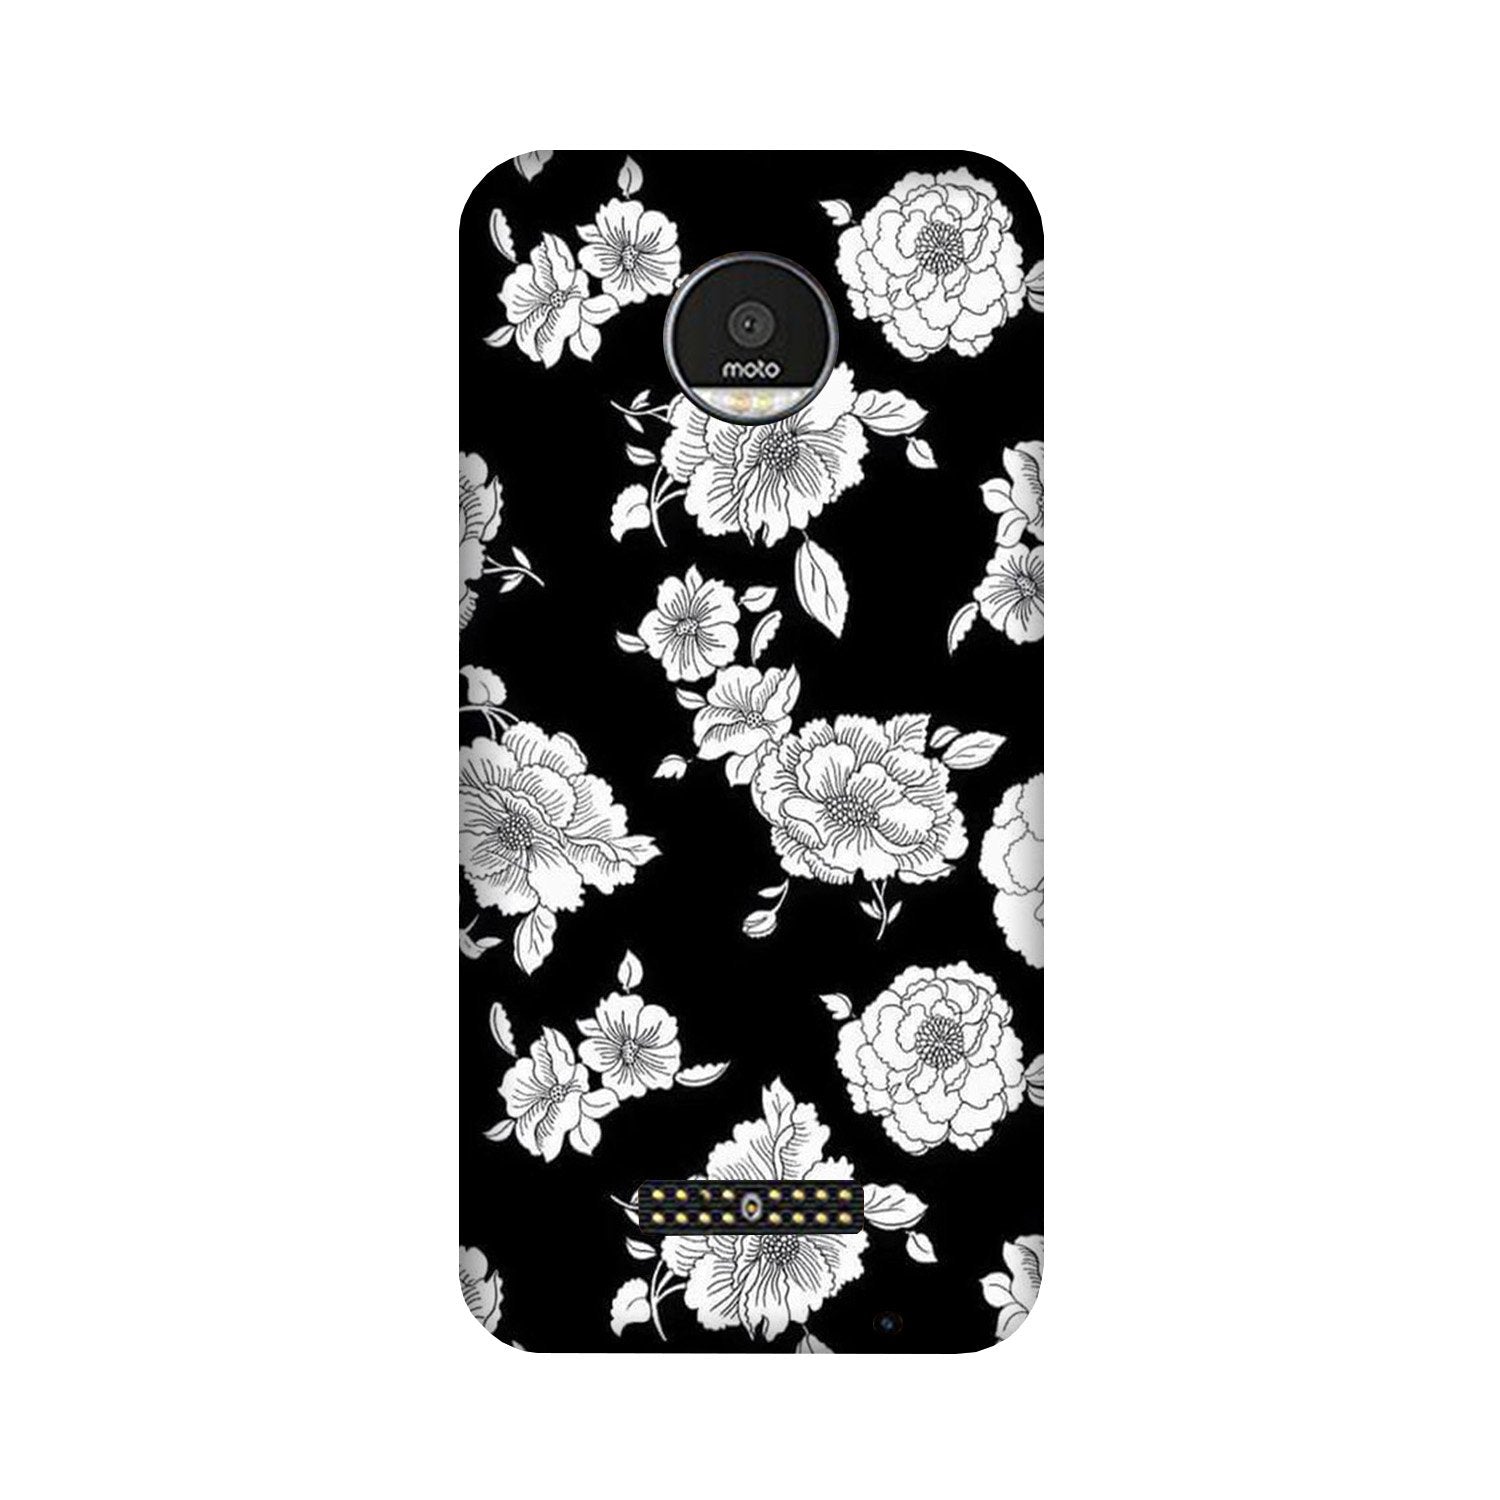 White flowers Black Background Case for Moto Z2 Play